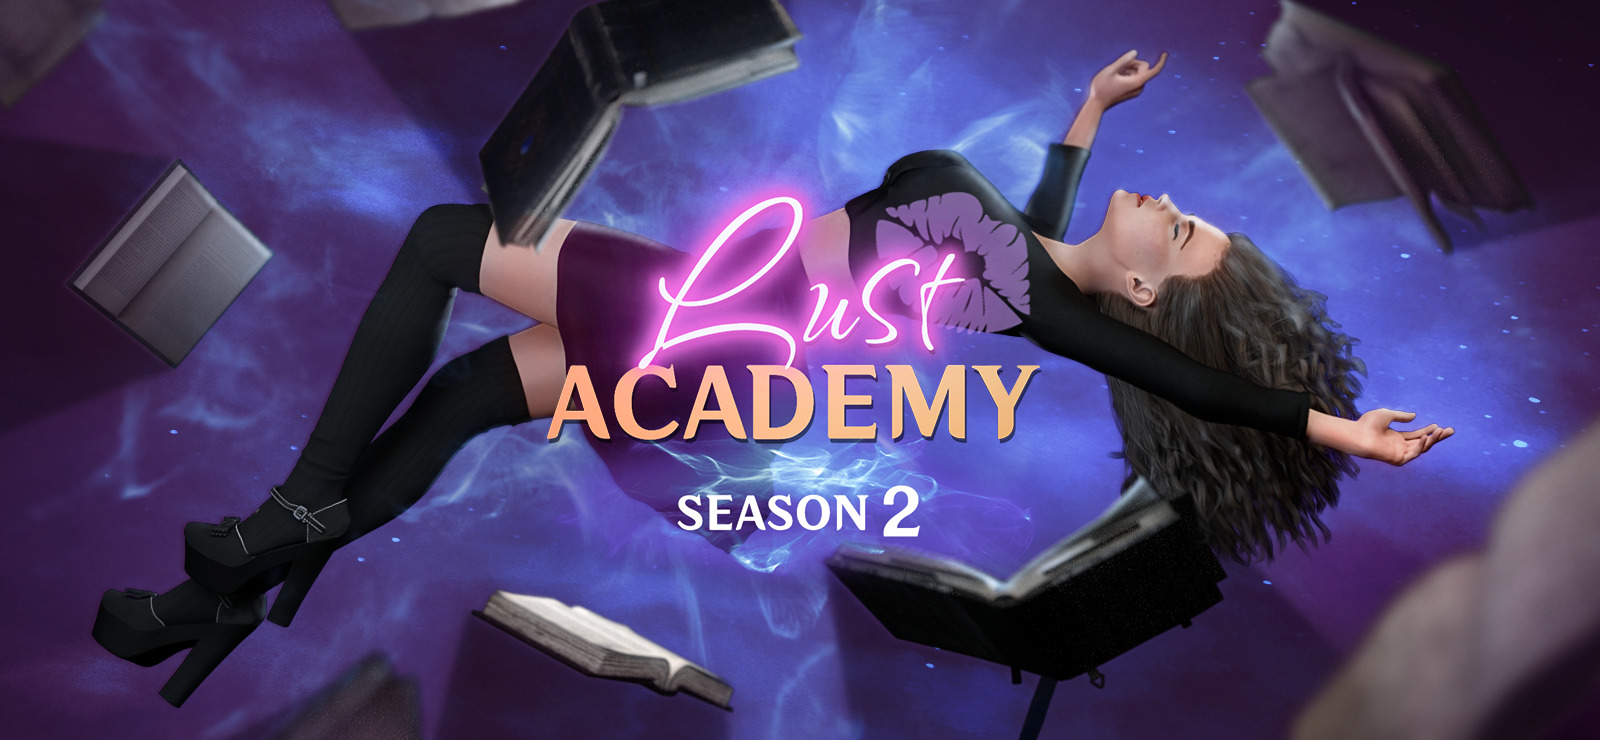 Lust academy season 2